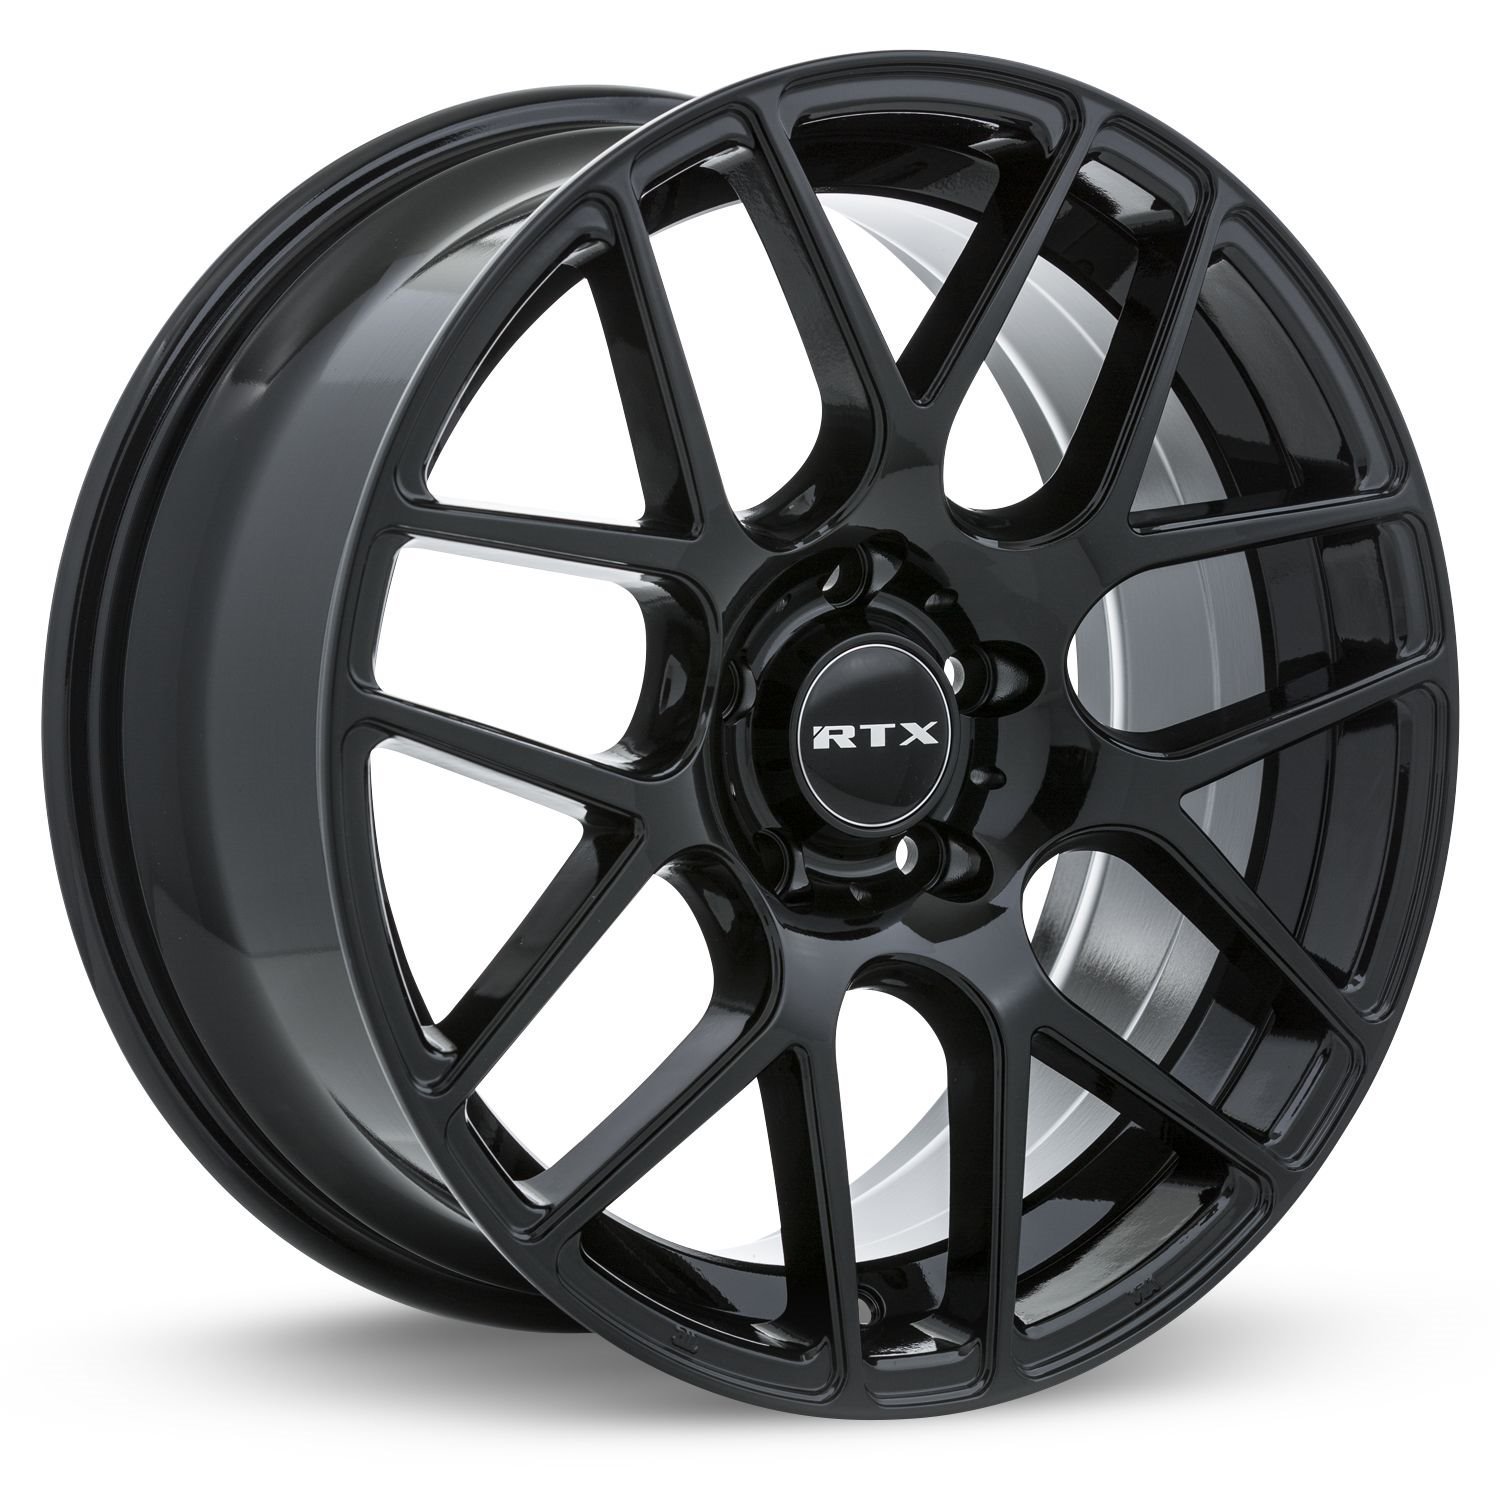 082766 RTX-Series Envy Wheel [Size: 18" x 8"] Gloss Black Finish